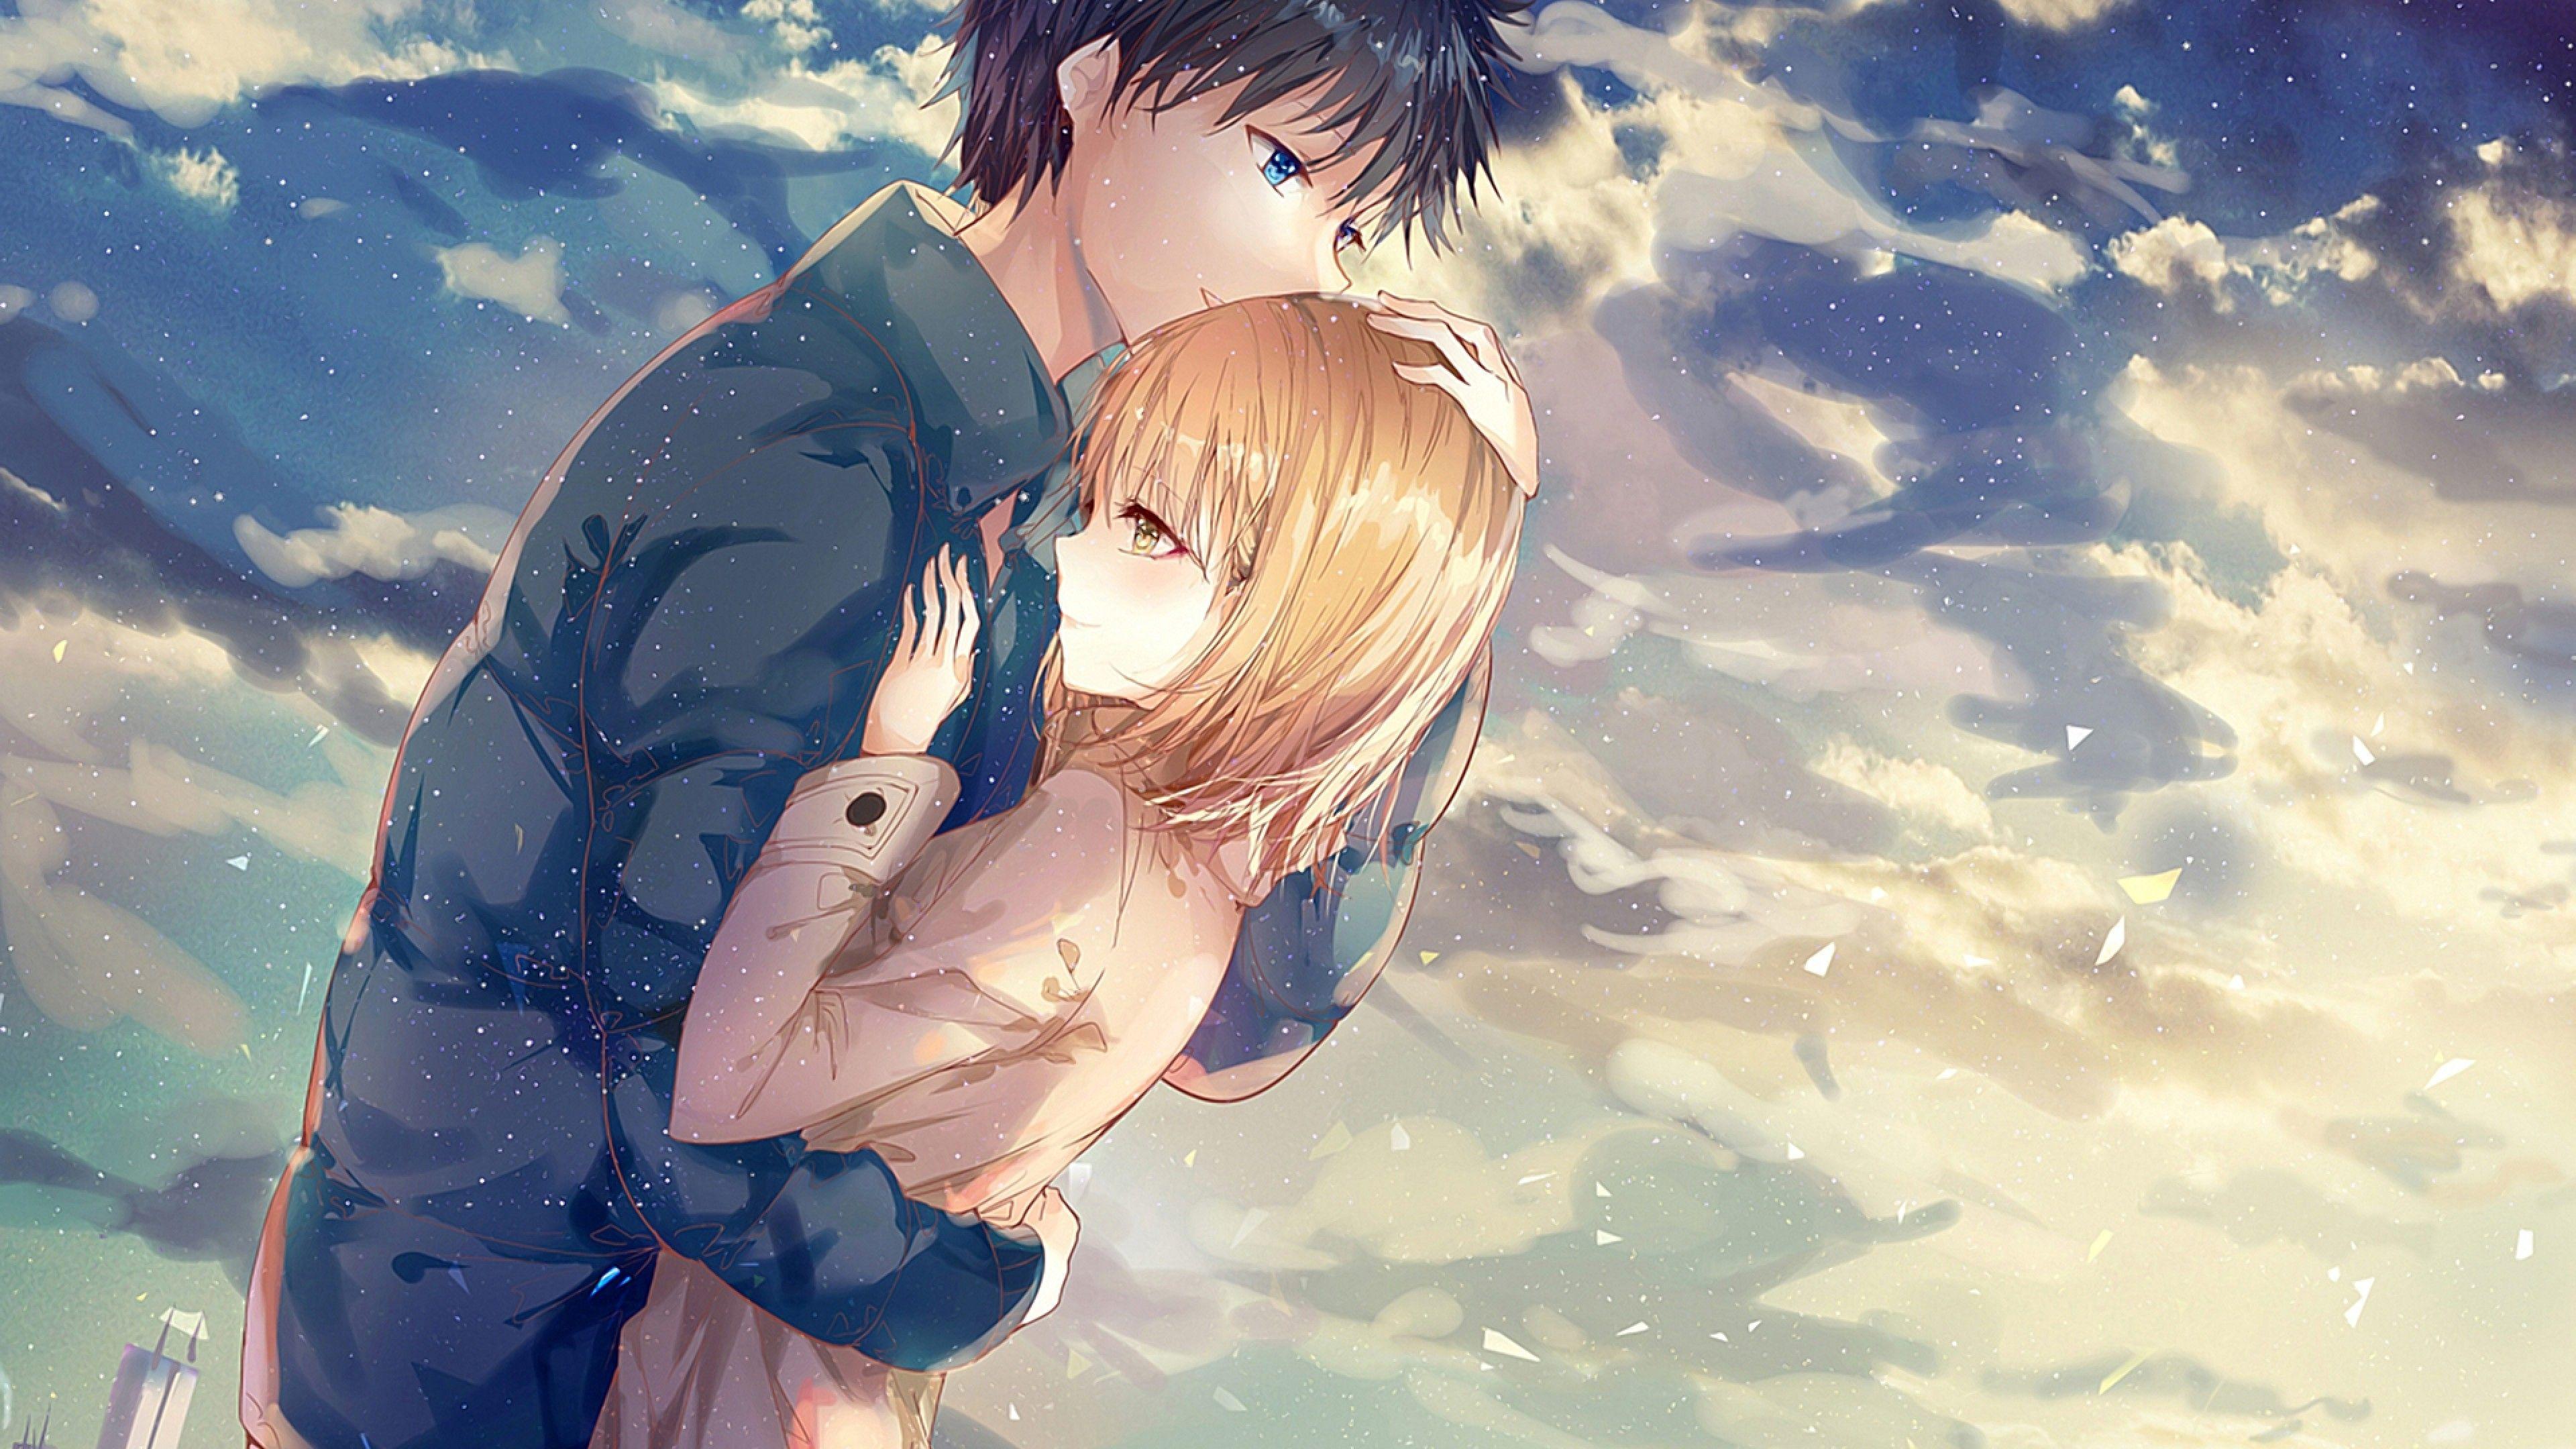 Download 3840x2160 Anime Couple, Hug, Romance, Clouds, Scenic.